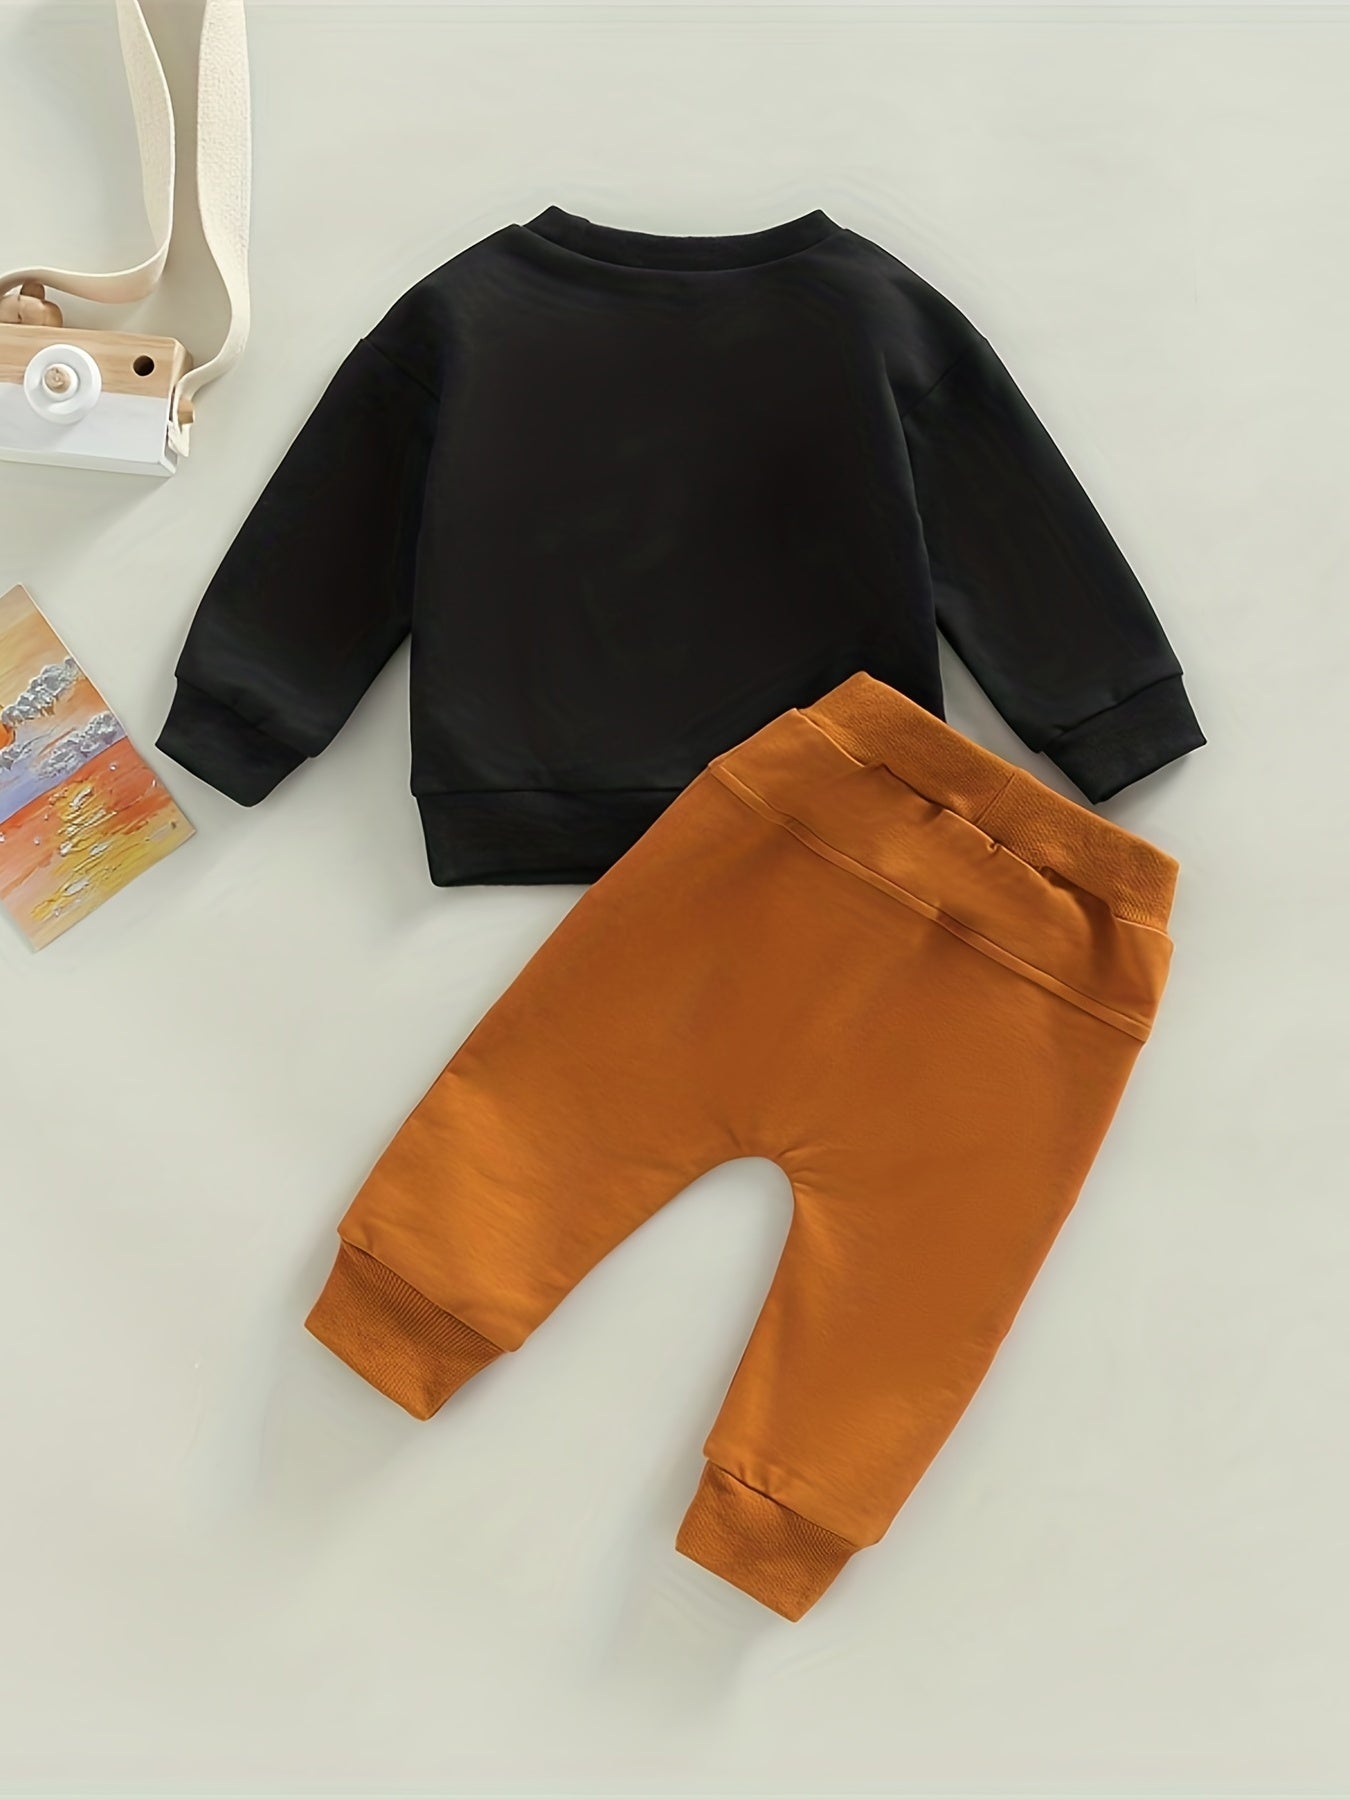 Baby Boys "MAMA'S BOY" Print Outfit - Long Sleeve Sweatshirt + Trousers Set